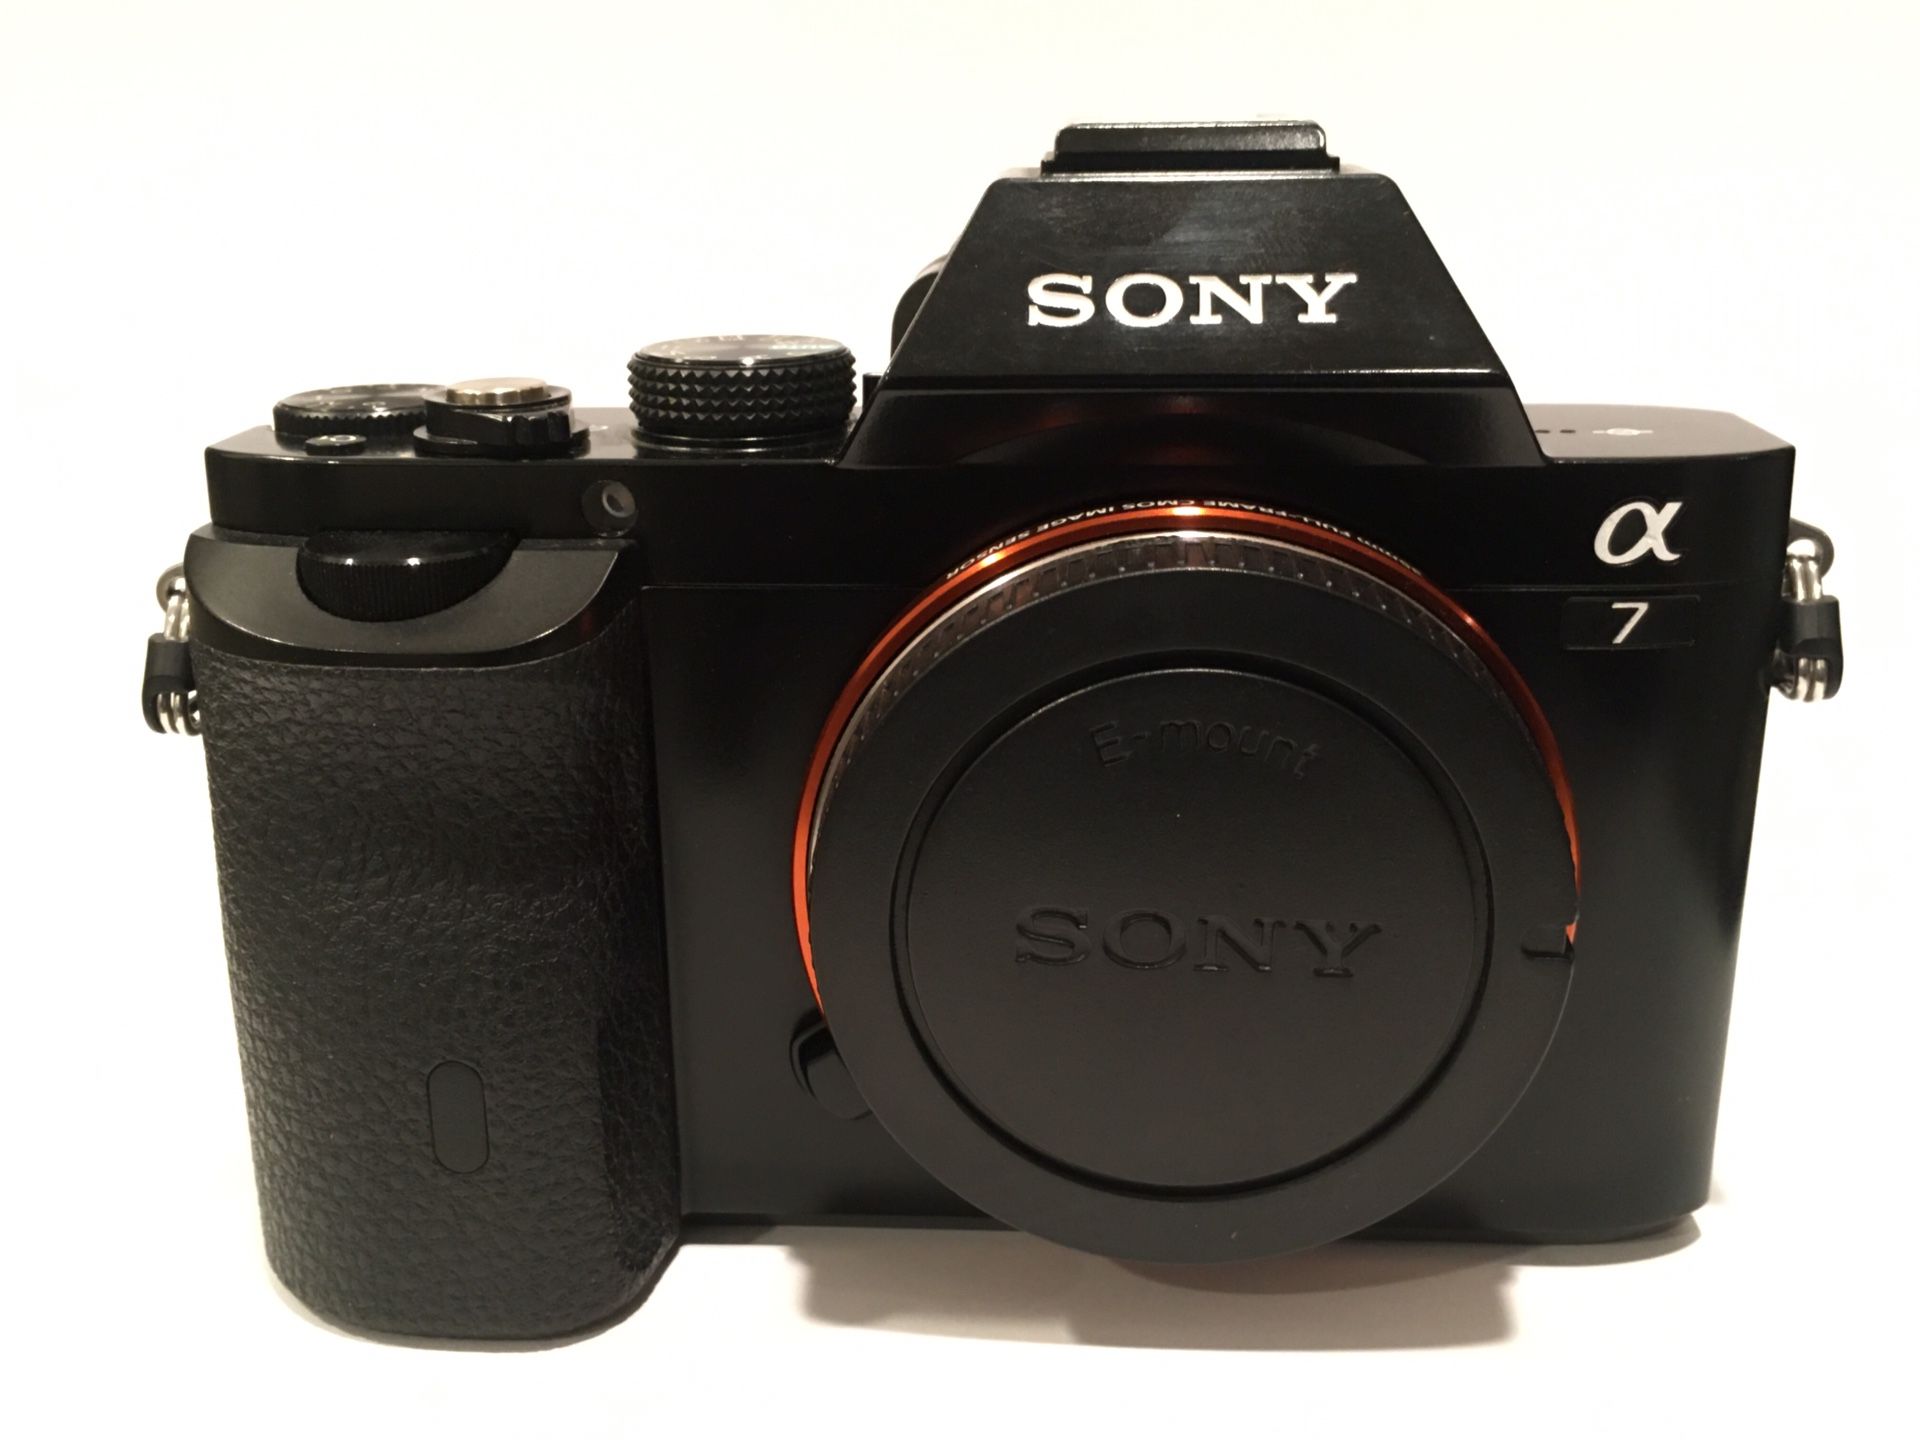 Sony A7 full frame mirrorless camera - Body